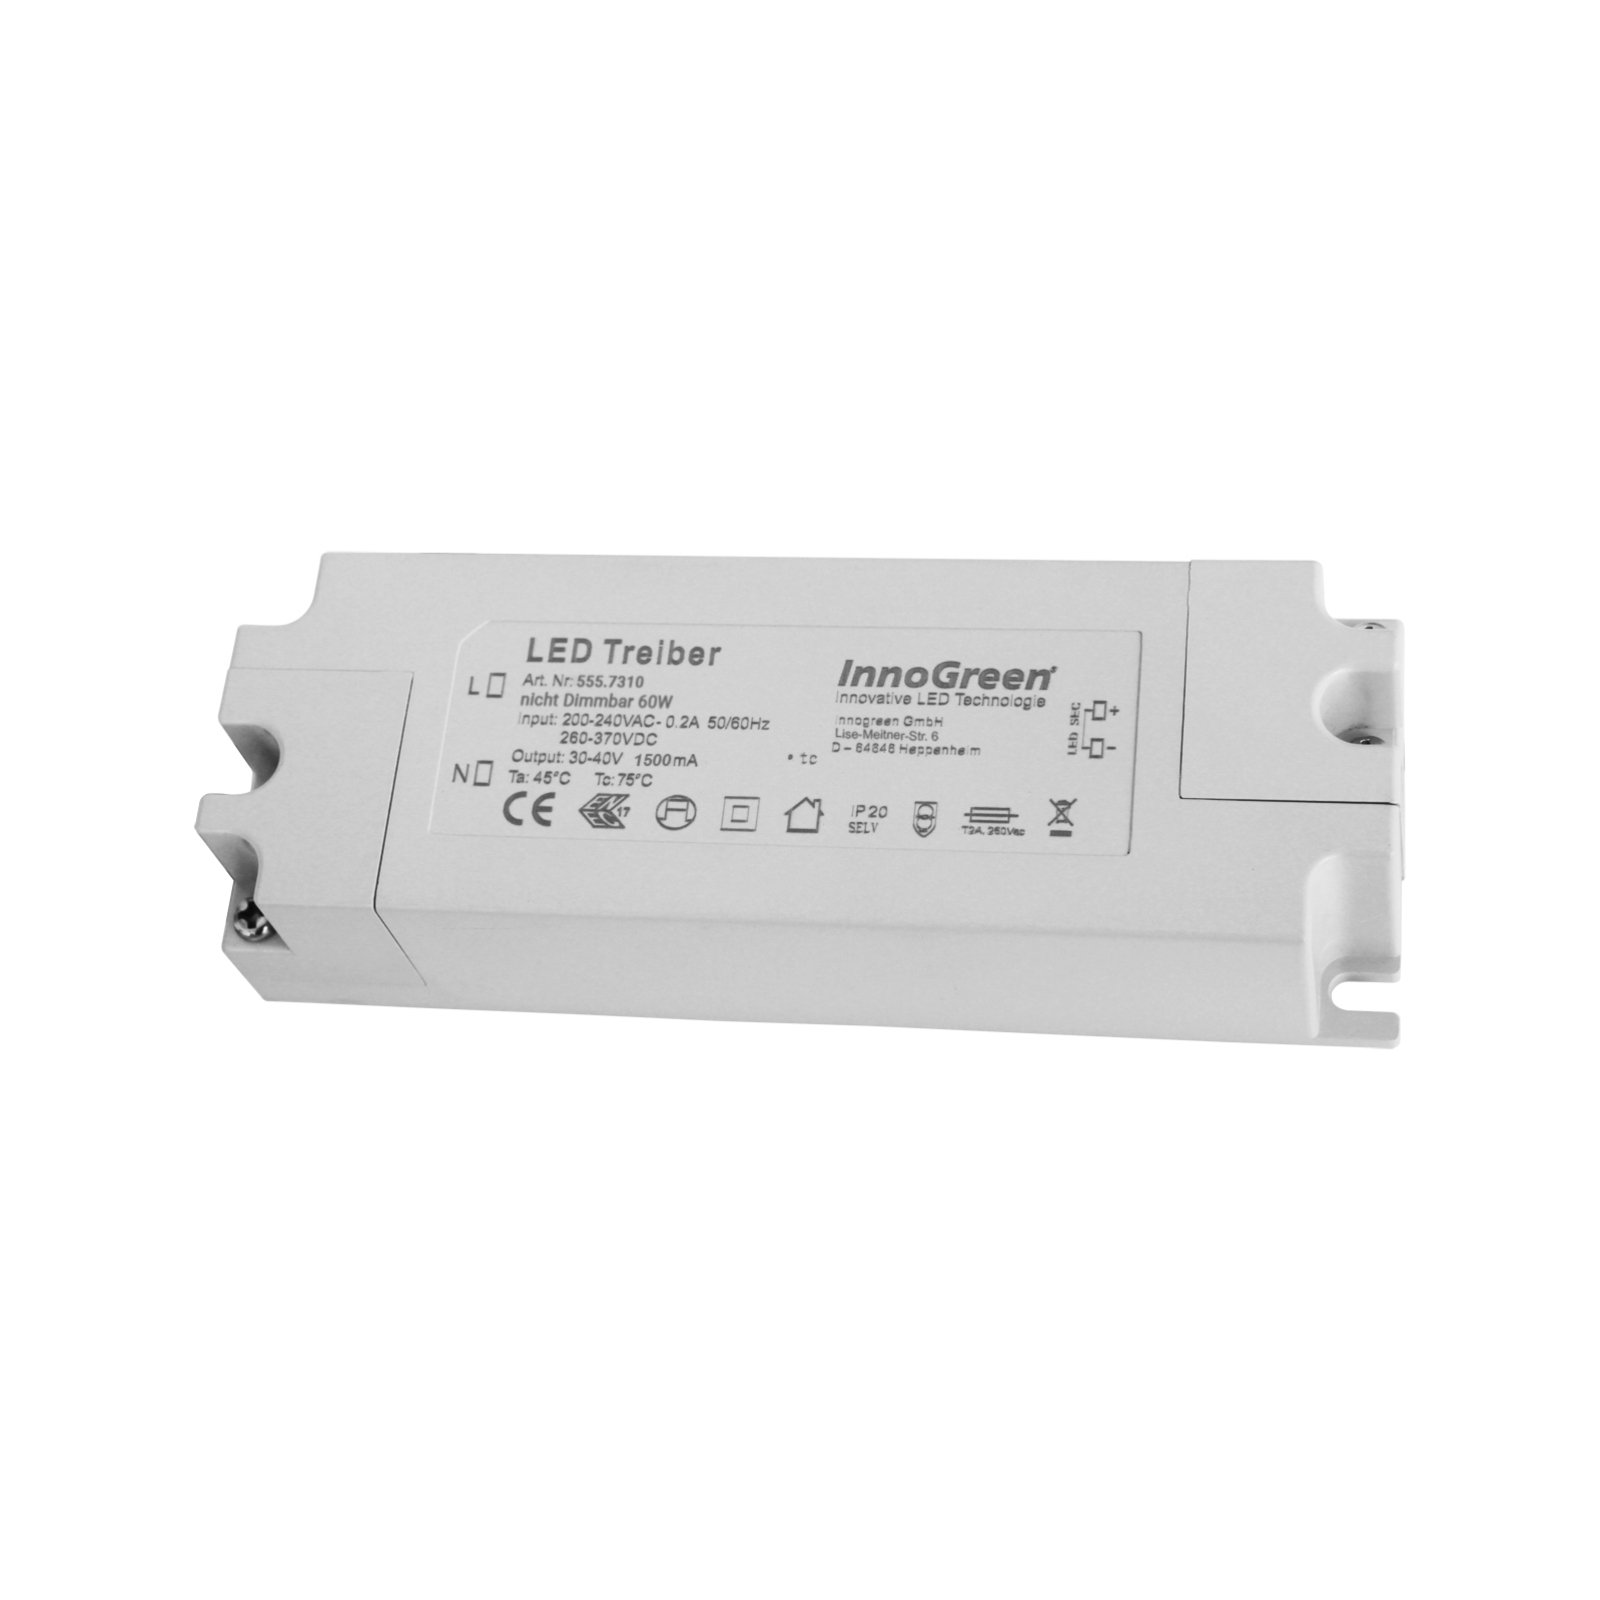 InnoGreen LED driver 220-240 V(AC/DC) 60W